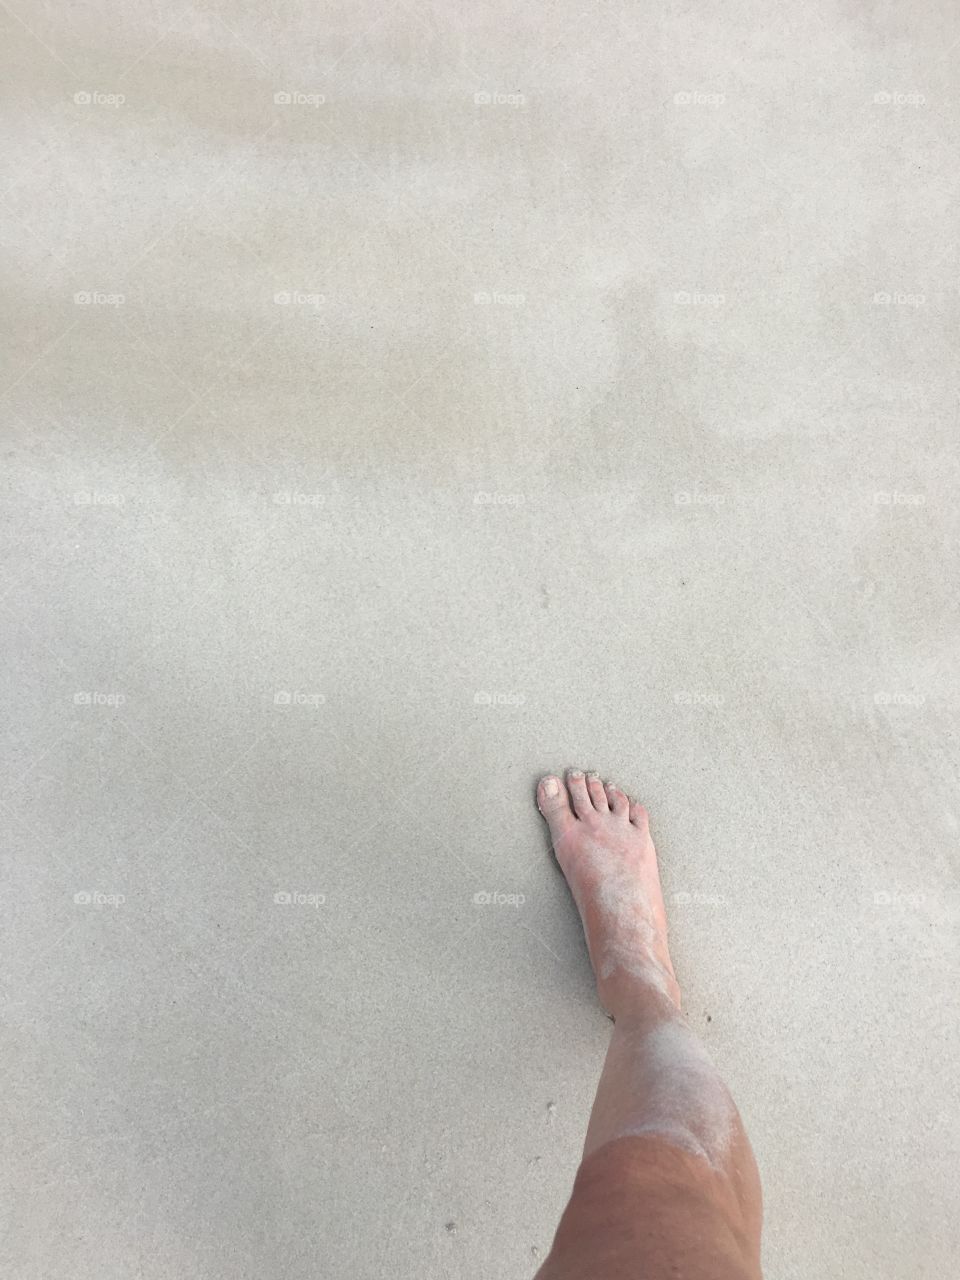 Foot on beach